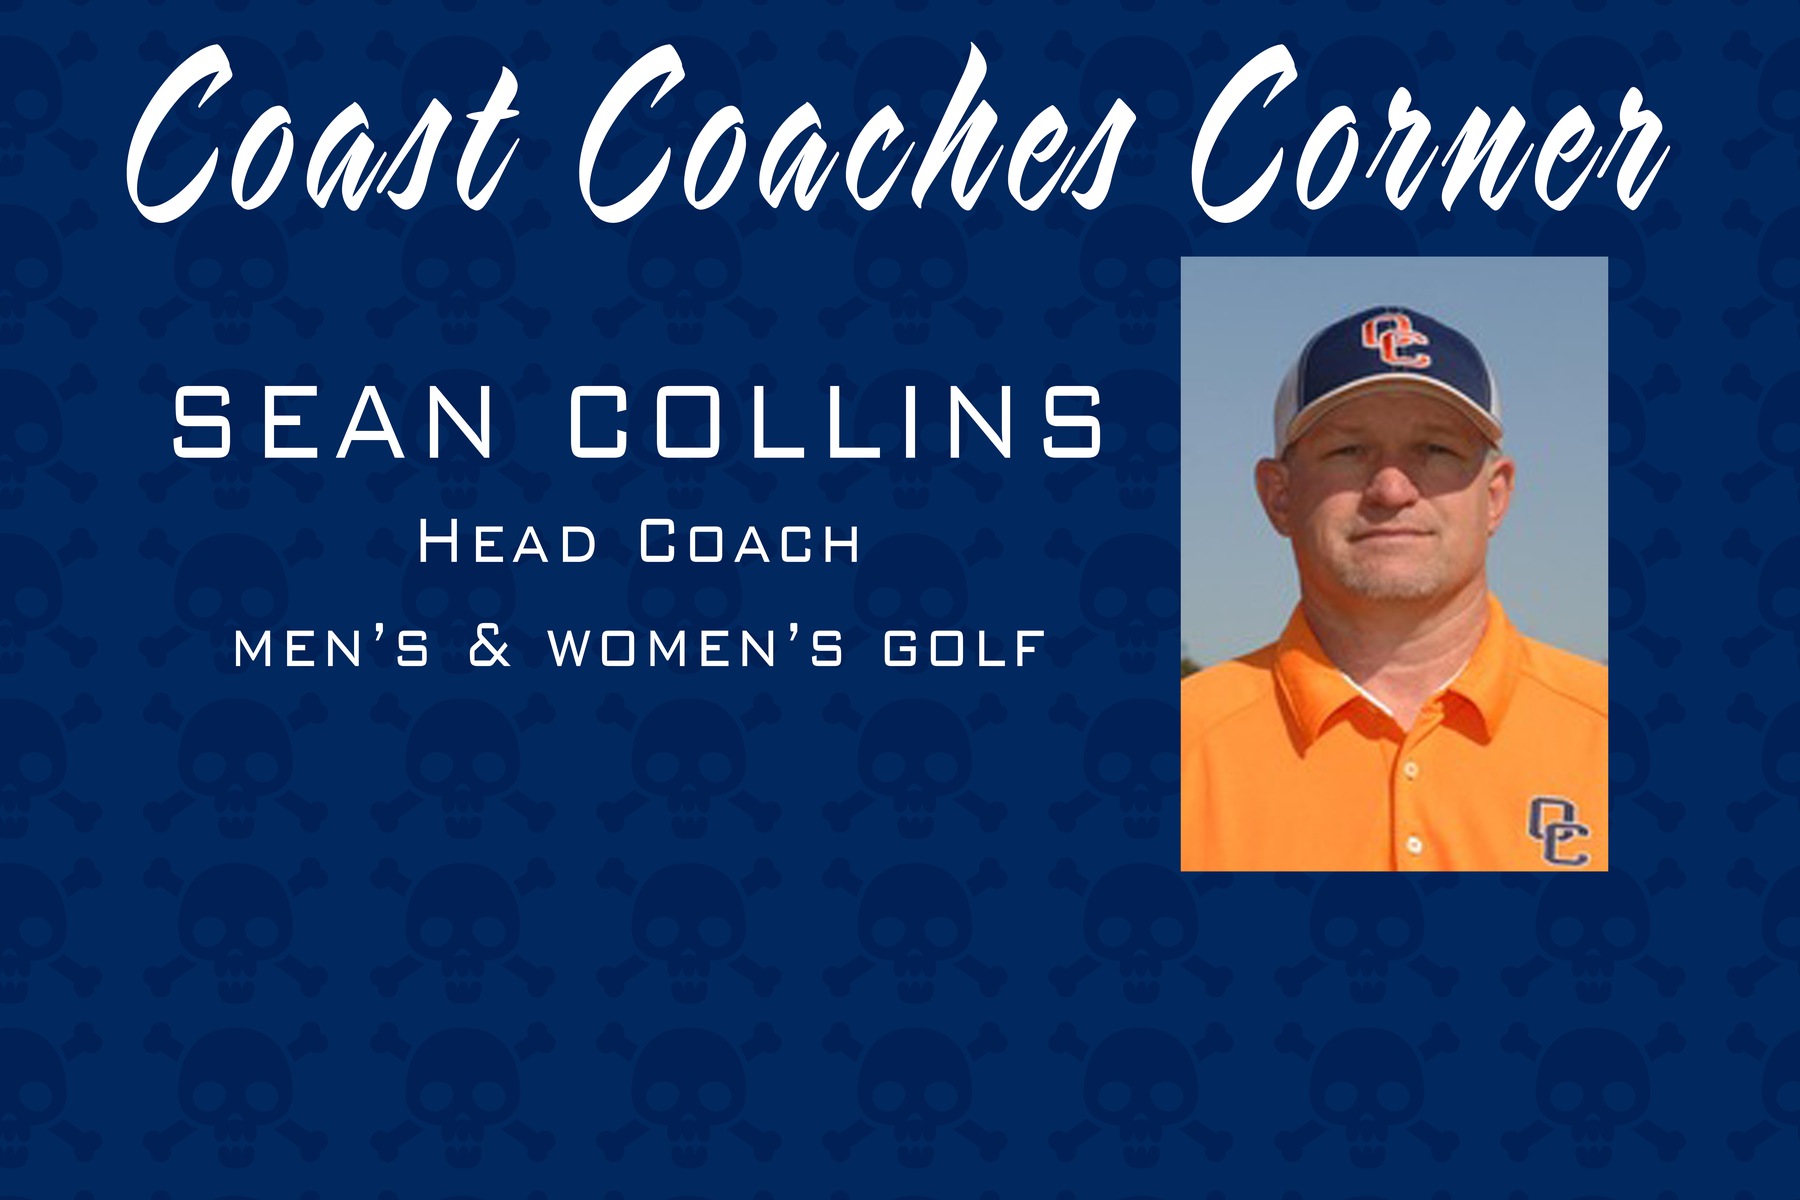 Coast Coaches Corner -- Sean Collins